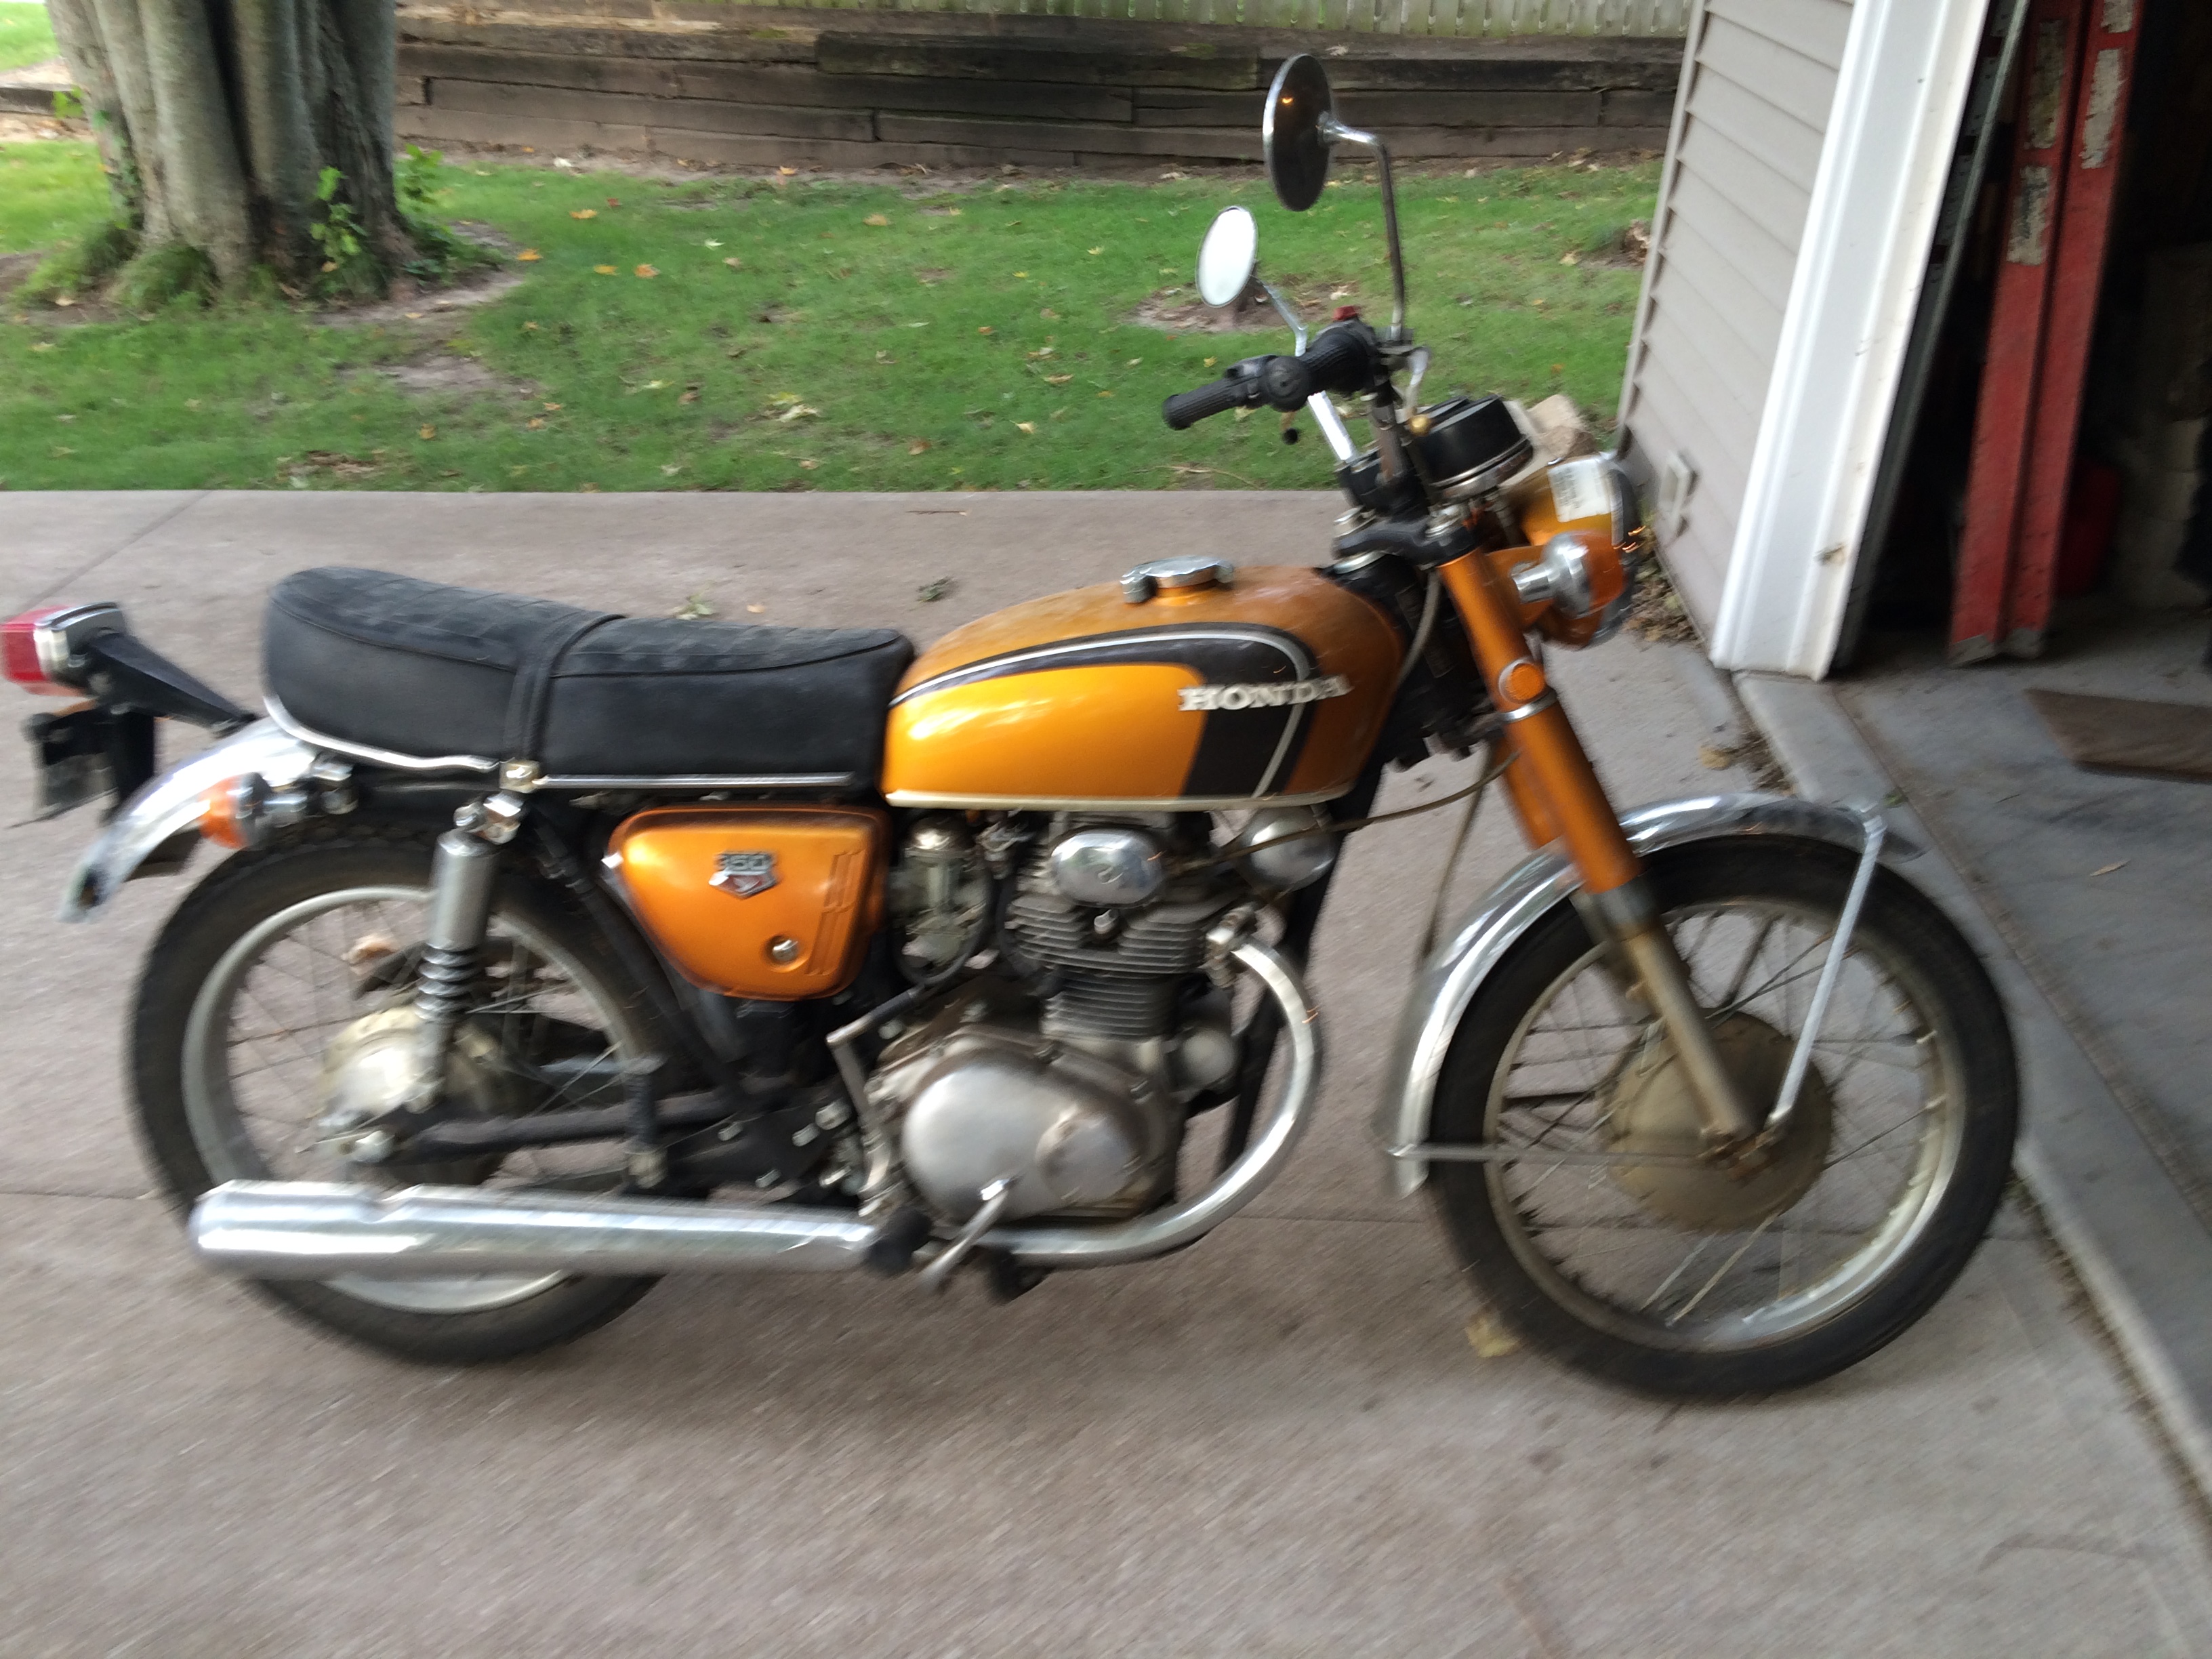 My 1972 CB350 Honda motorcycle that was stolen